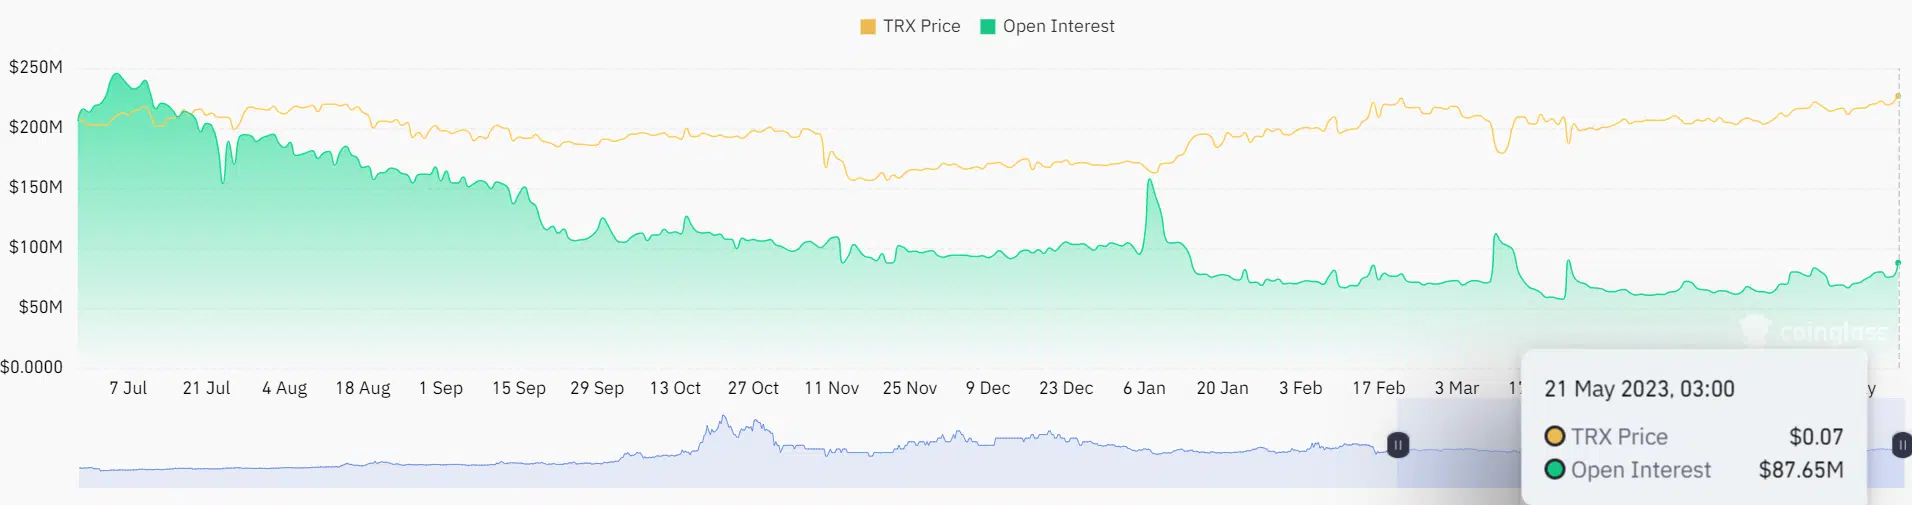 Tron [TRX] open interest rate